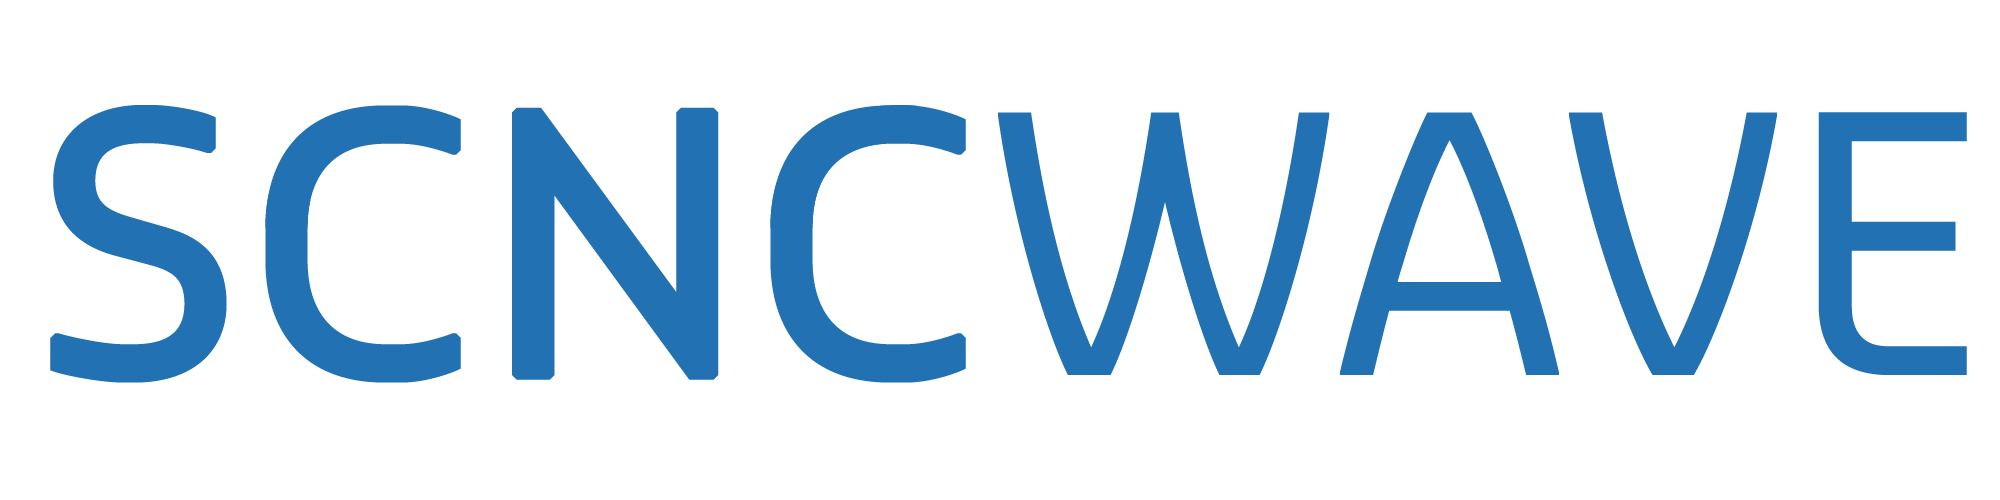 SW GmbH & Co. KG (SCNCEWAVE)